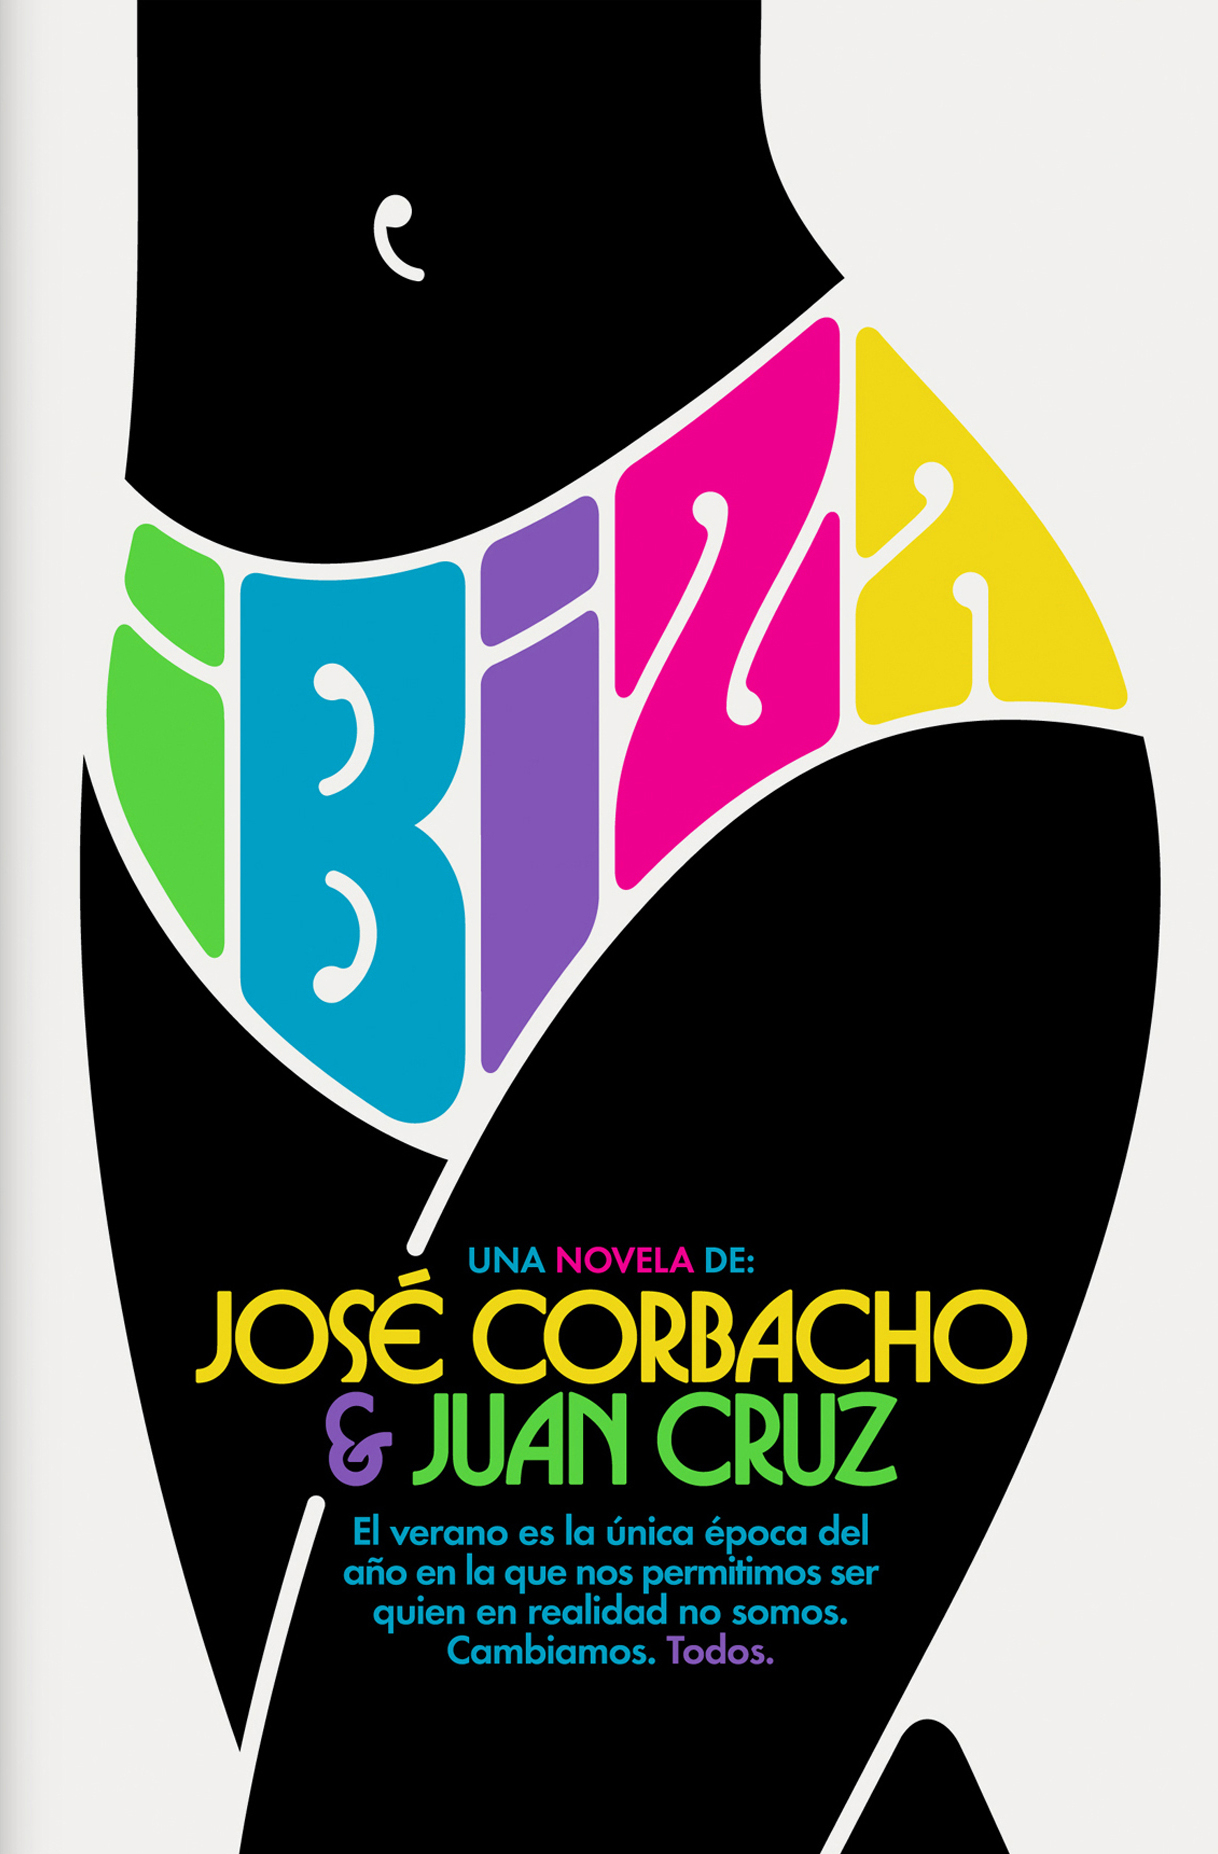 Ibiza / Jose Corbacho and Juan Cruz